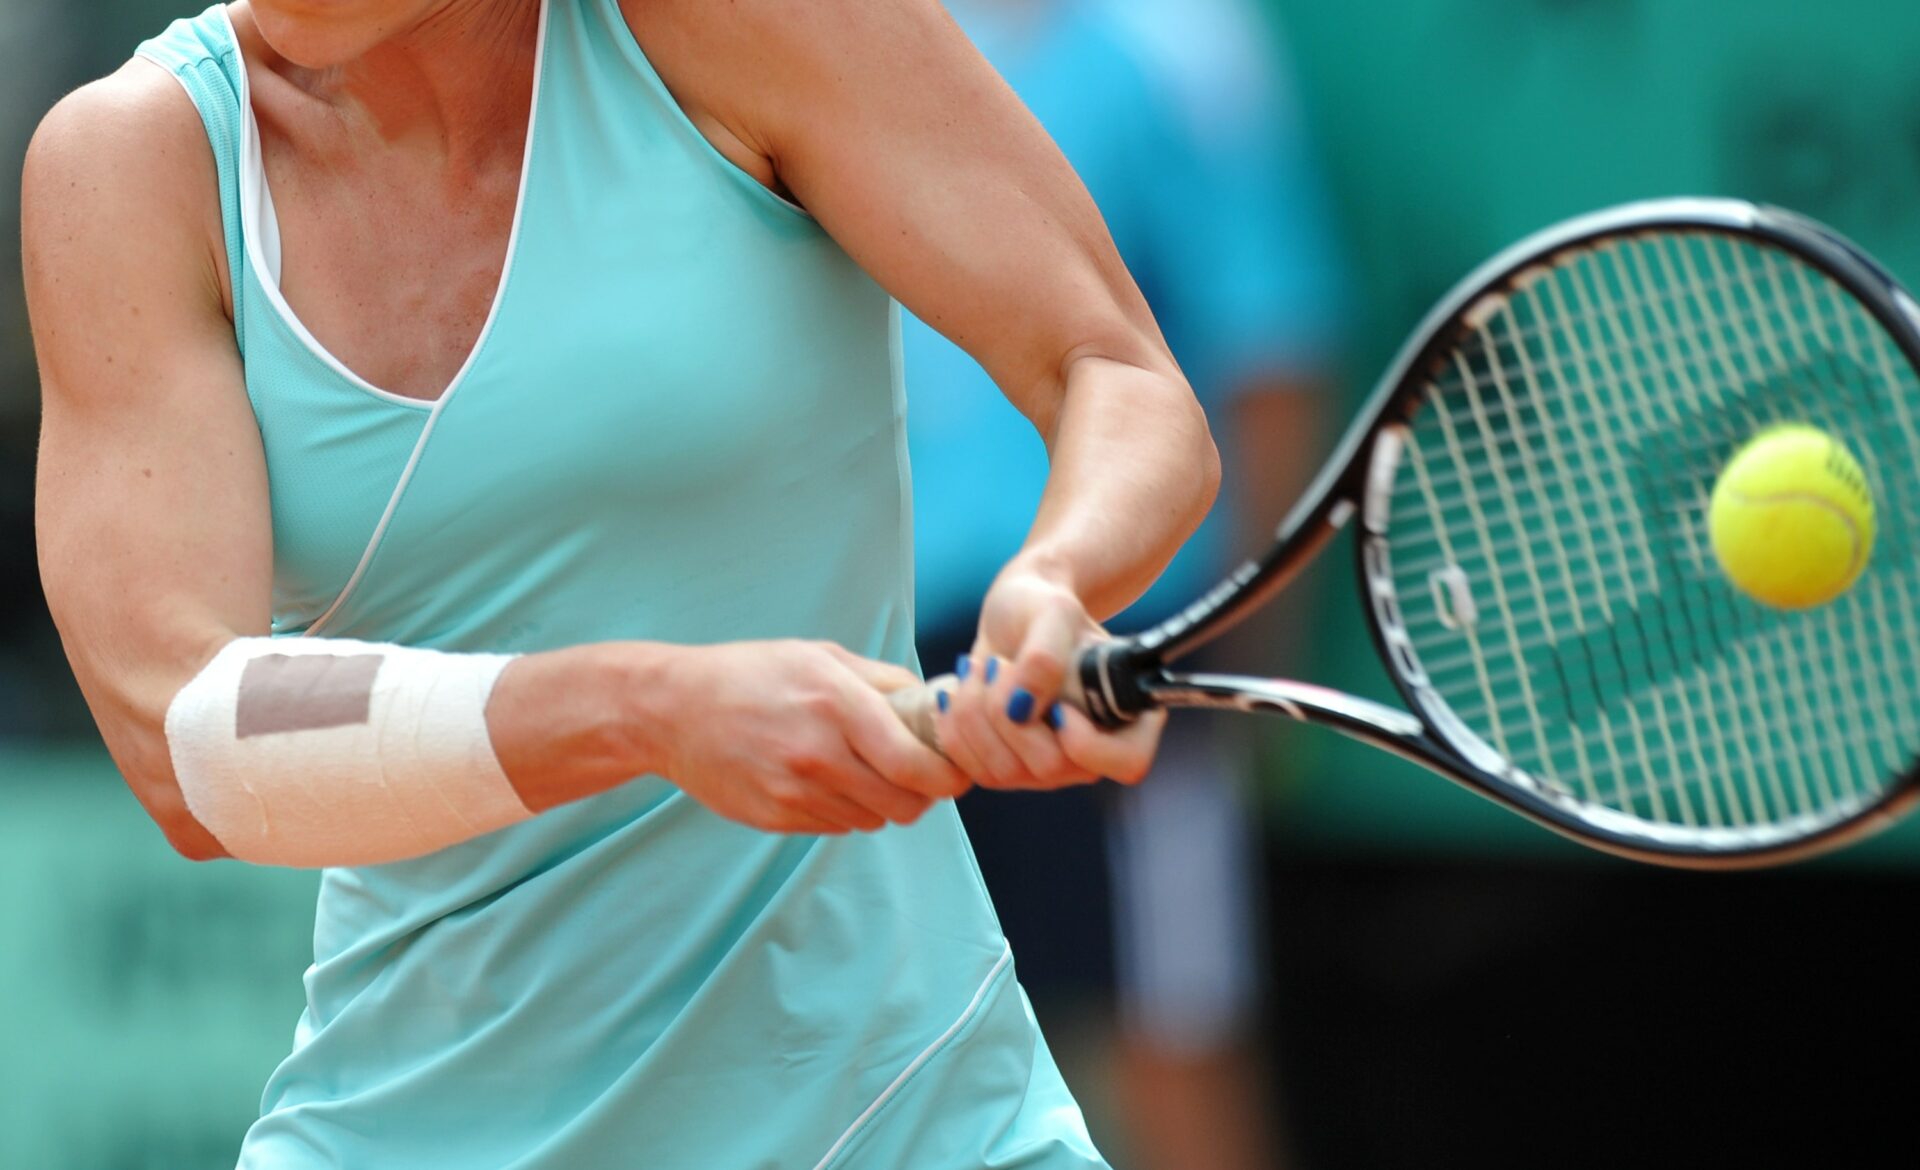 tennis-player-wrist-injury-manchester